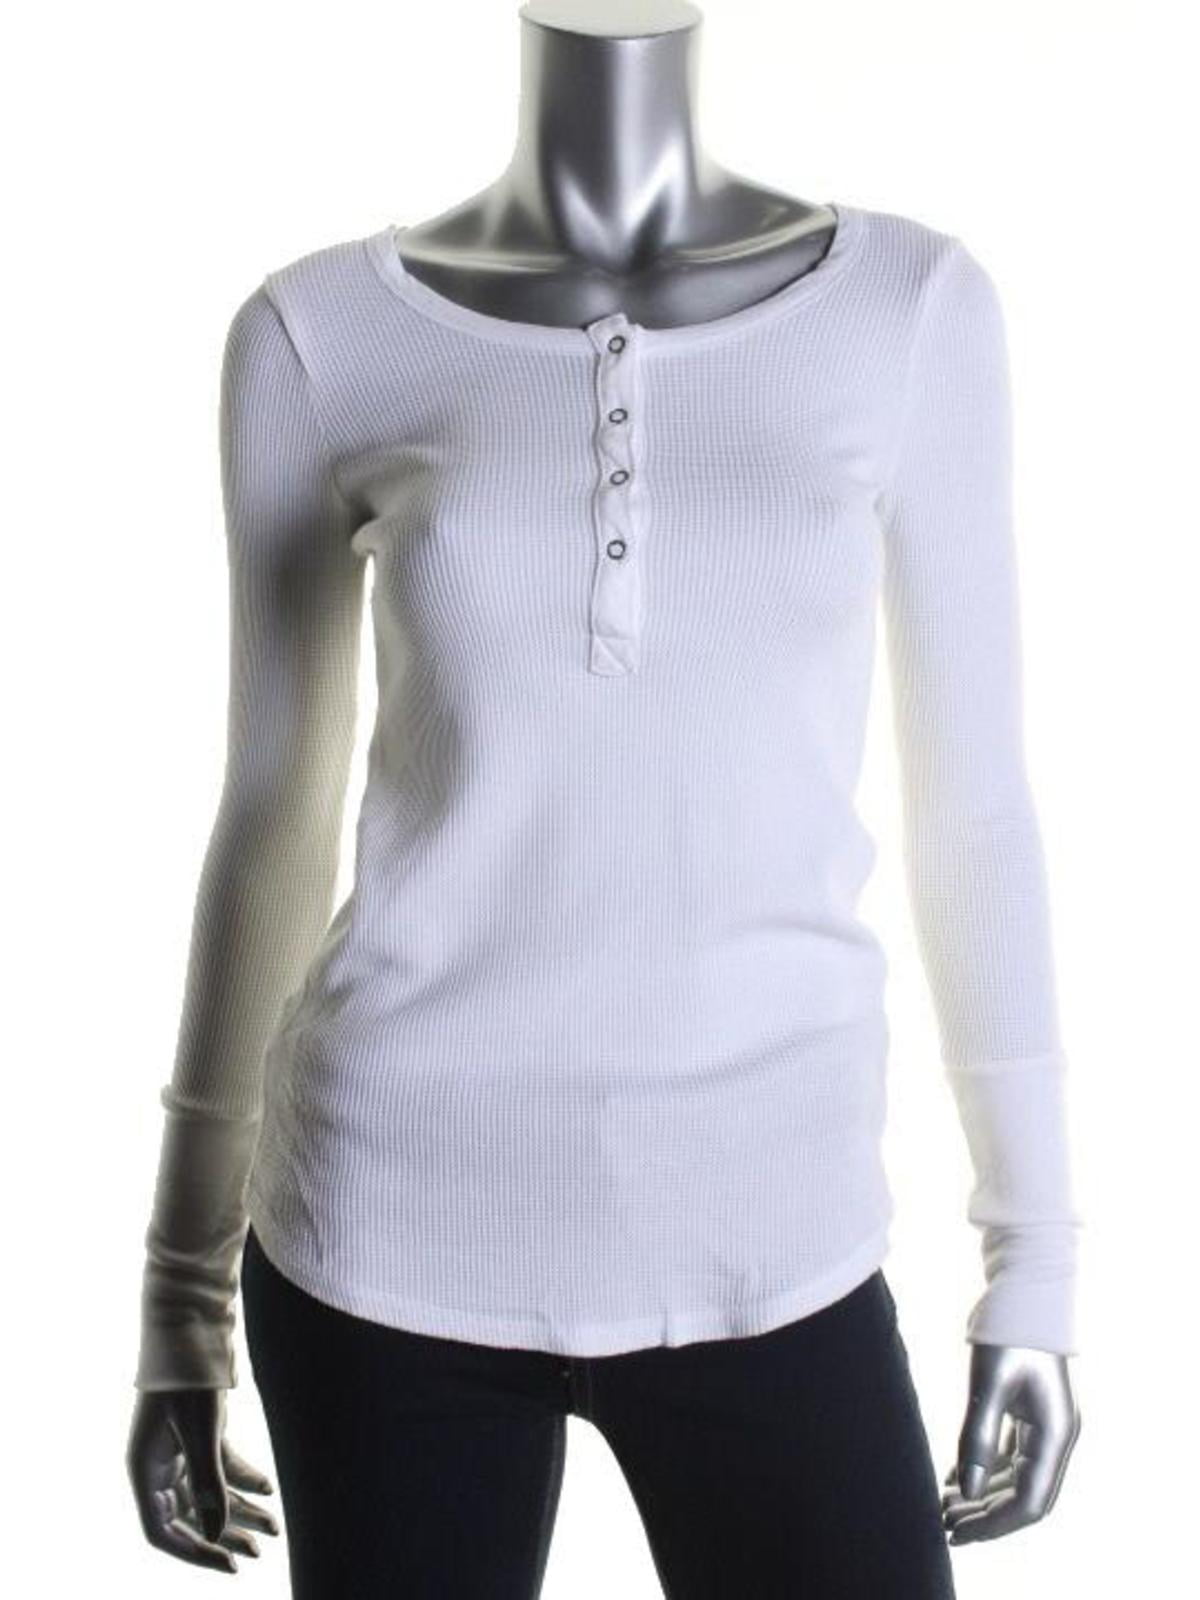 Splendid Women's Long Sleeve Thermal Henley Shirt, White, XX-Small